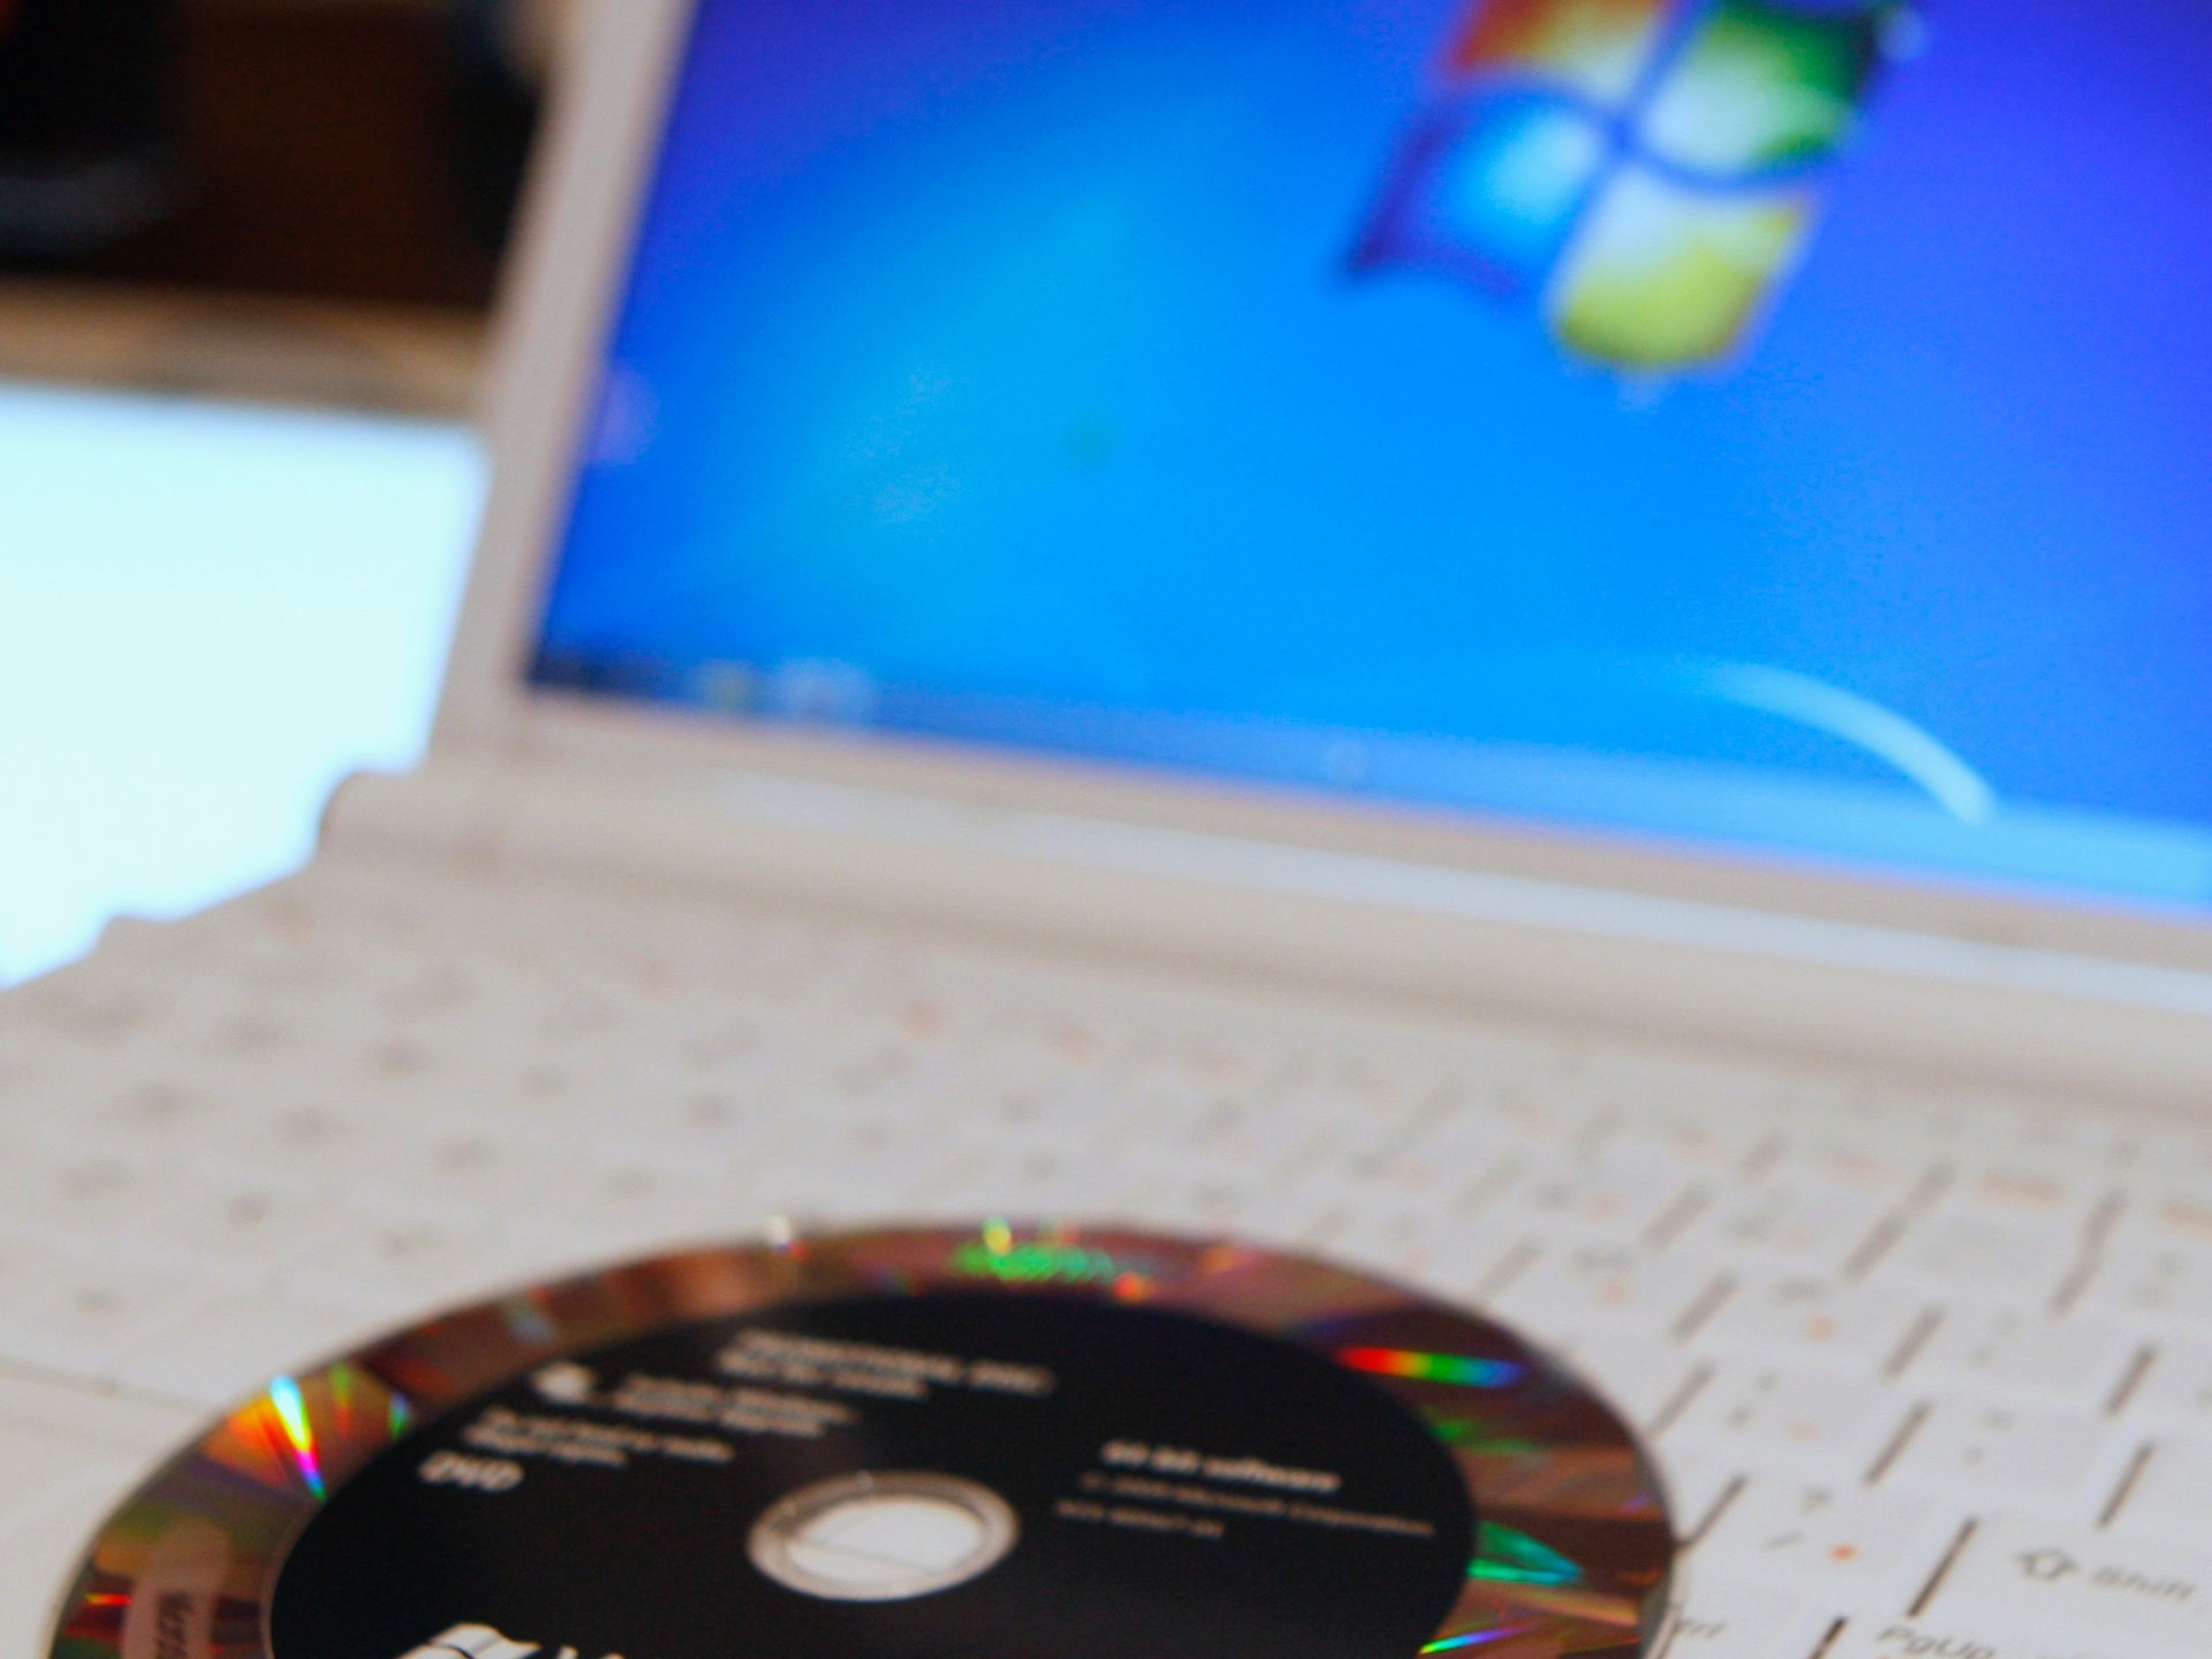 Un portátil con un viejo sistema operativo de Microsoft, Windows 7